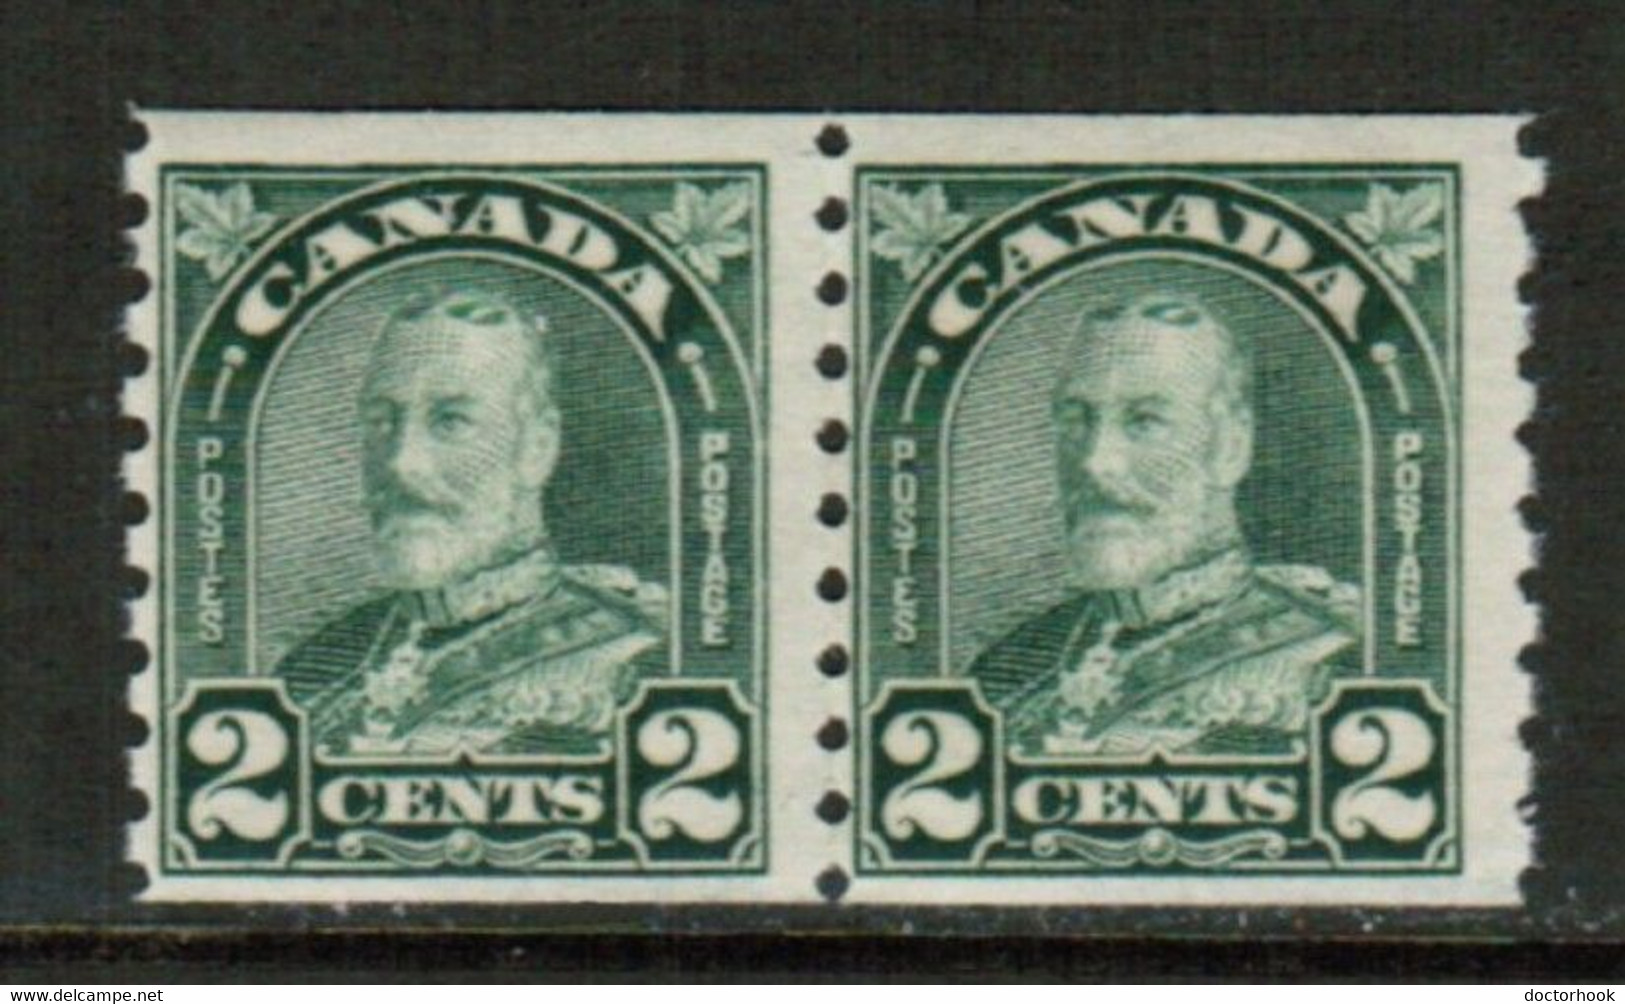 CANADA  Scott # 180* F-VF MINT LH PAIR (Stamp Scan # 783) - Rollo De Sellos